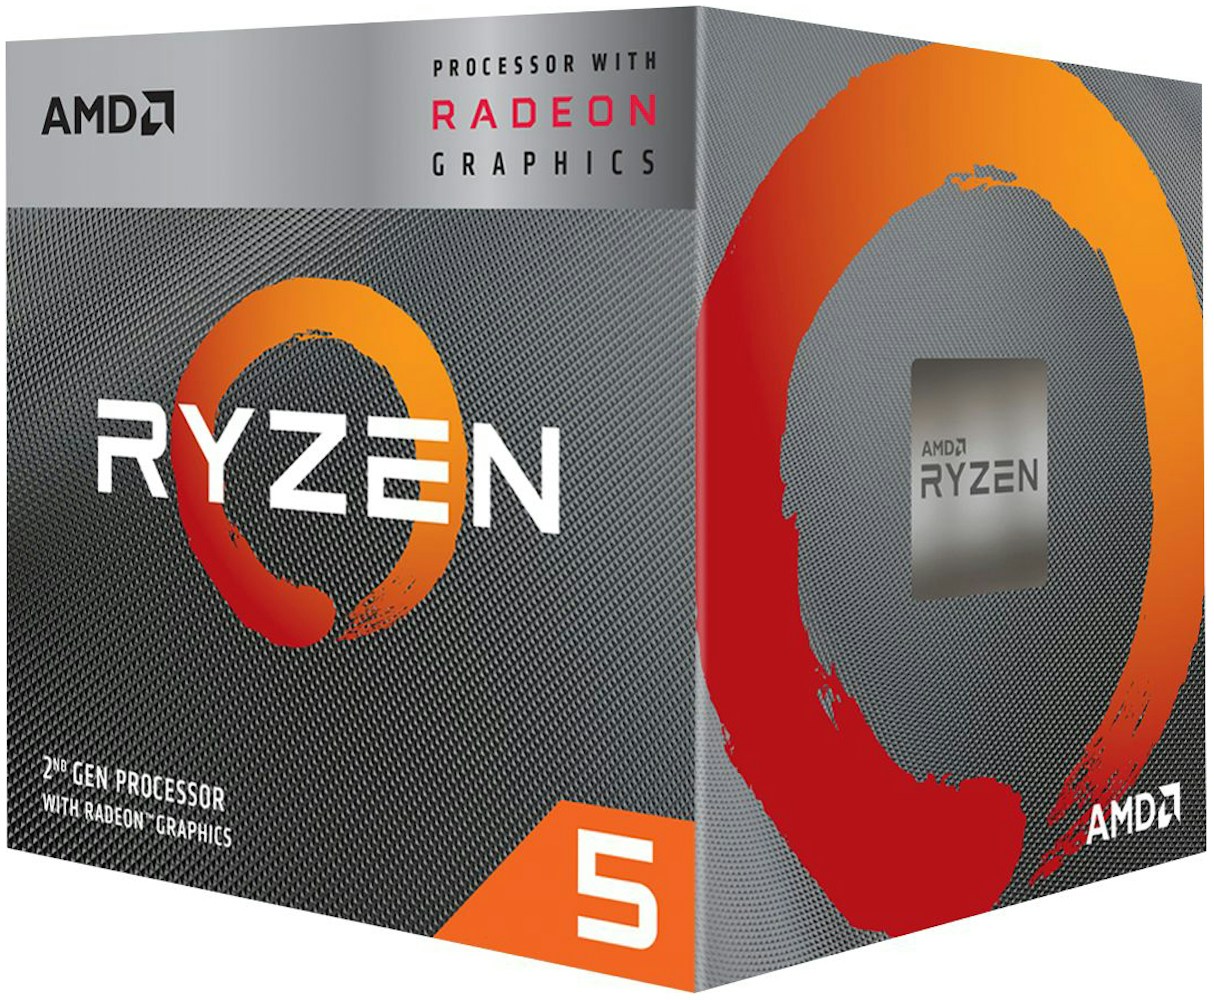 AMD Ryzen 5 3400G 2nd Unlocked Desktop Processor (YD3400C5FHBOX)